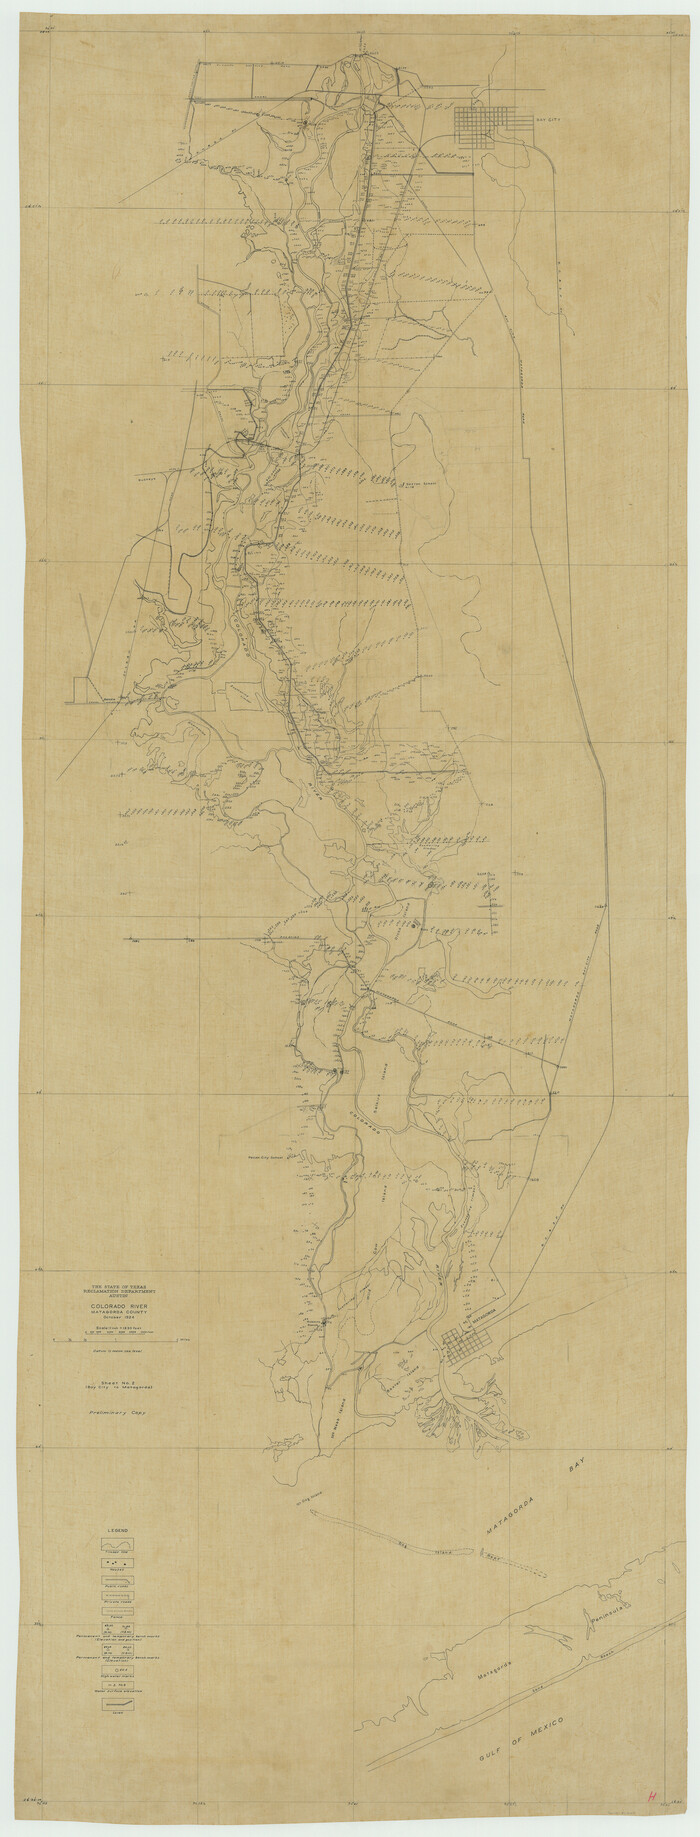 65260, Colorado River, Bay City to Matagorda Sheet 2, General Map Collection